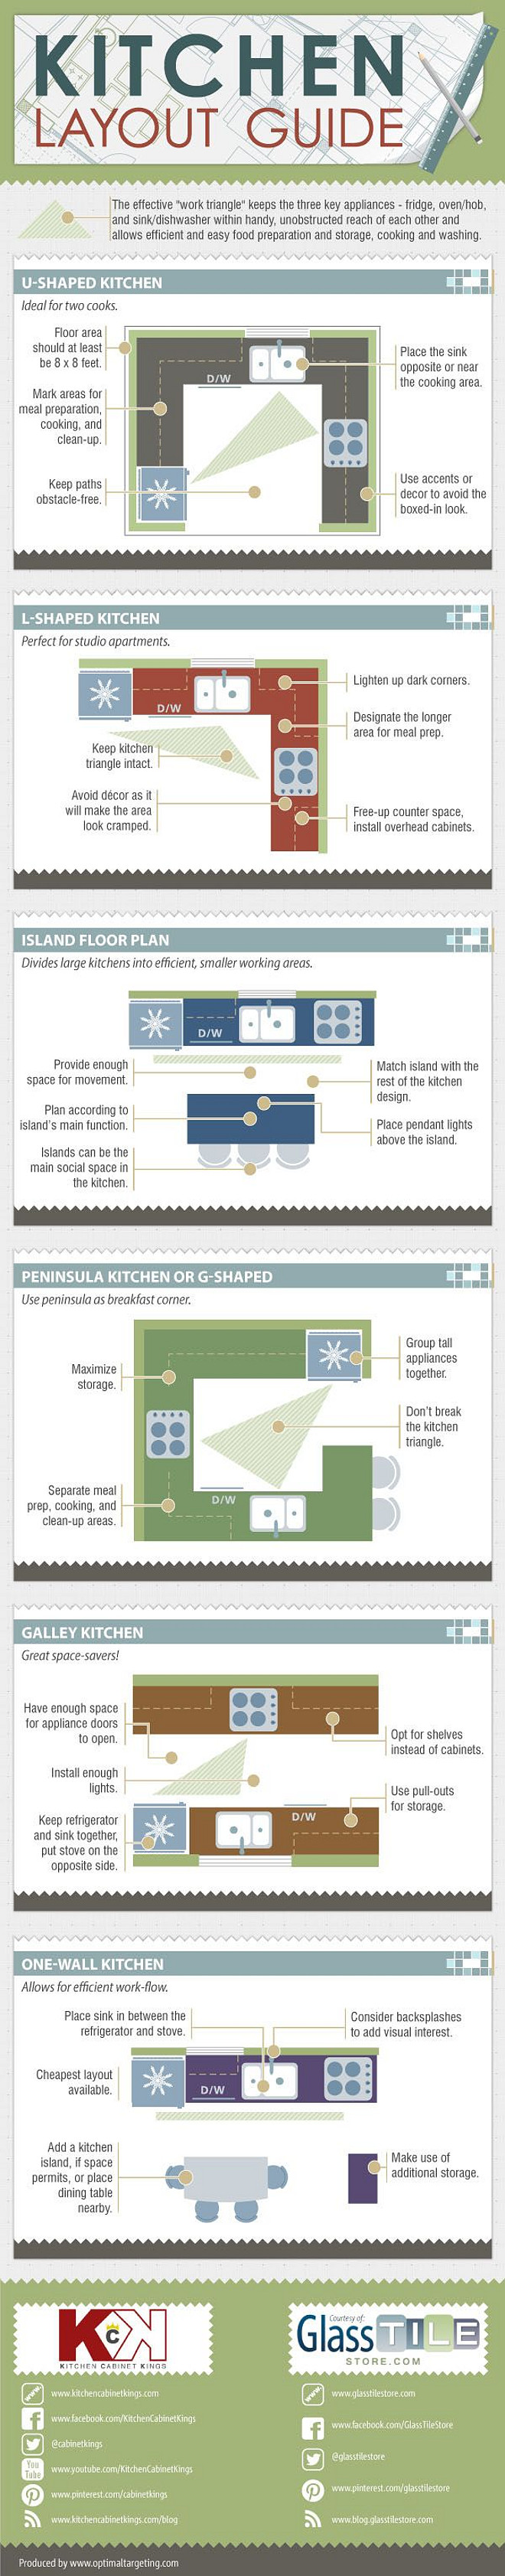 Kitchen Layout. Interior Design Tips on Kitchen Layout. Kitchen Layout Guide. #Kitchen #KitchenLayout #Guide #InteriordesignTips